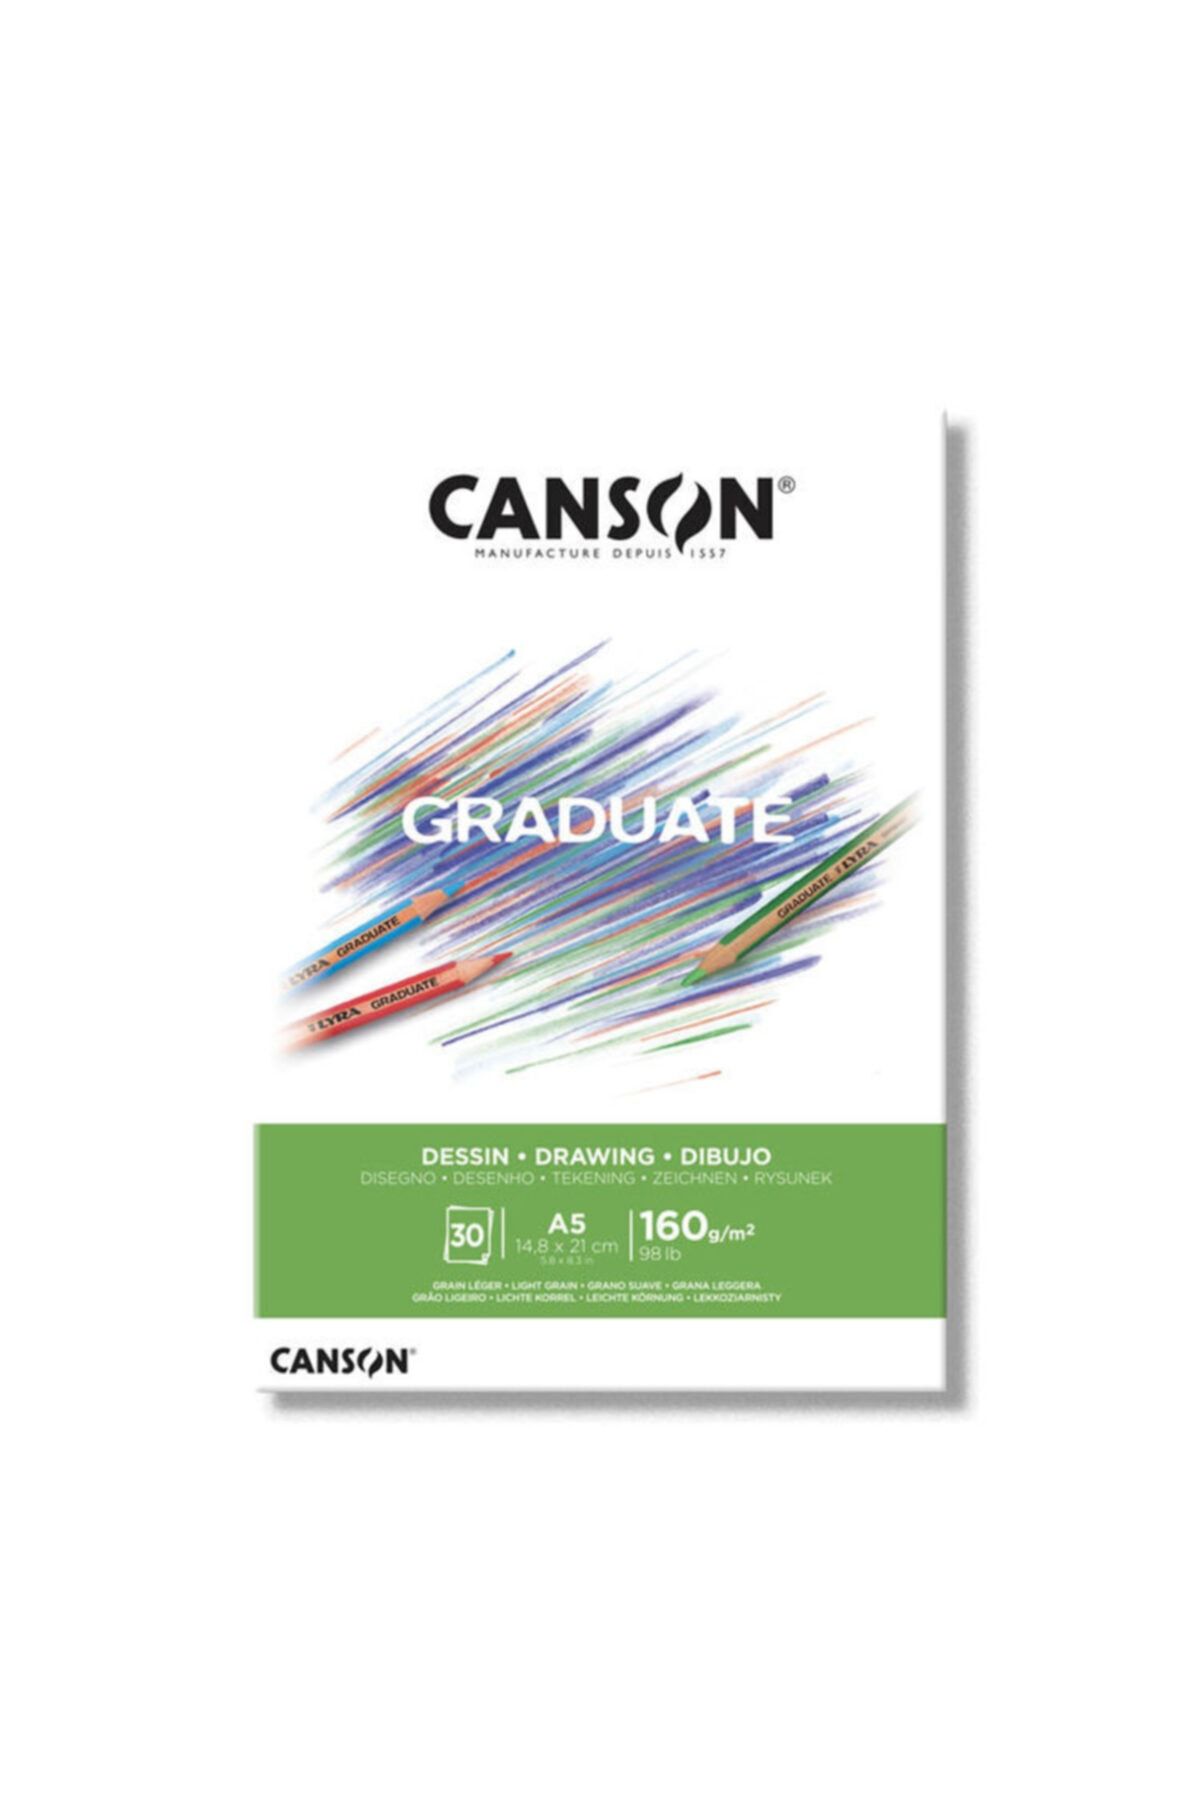 Canson Graduate Drawing Çizim Defteri 160 Gr. A5 30 Yp.